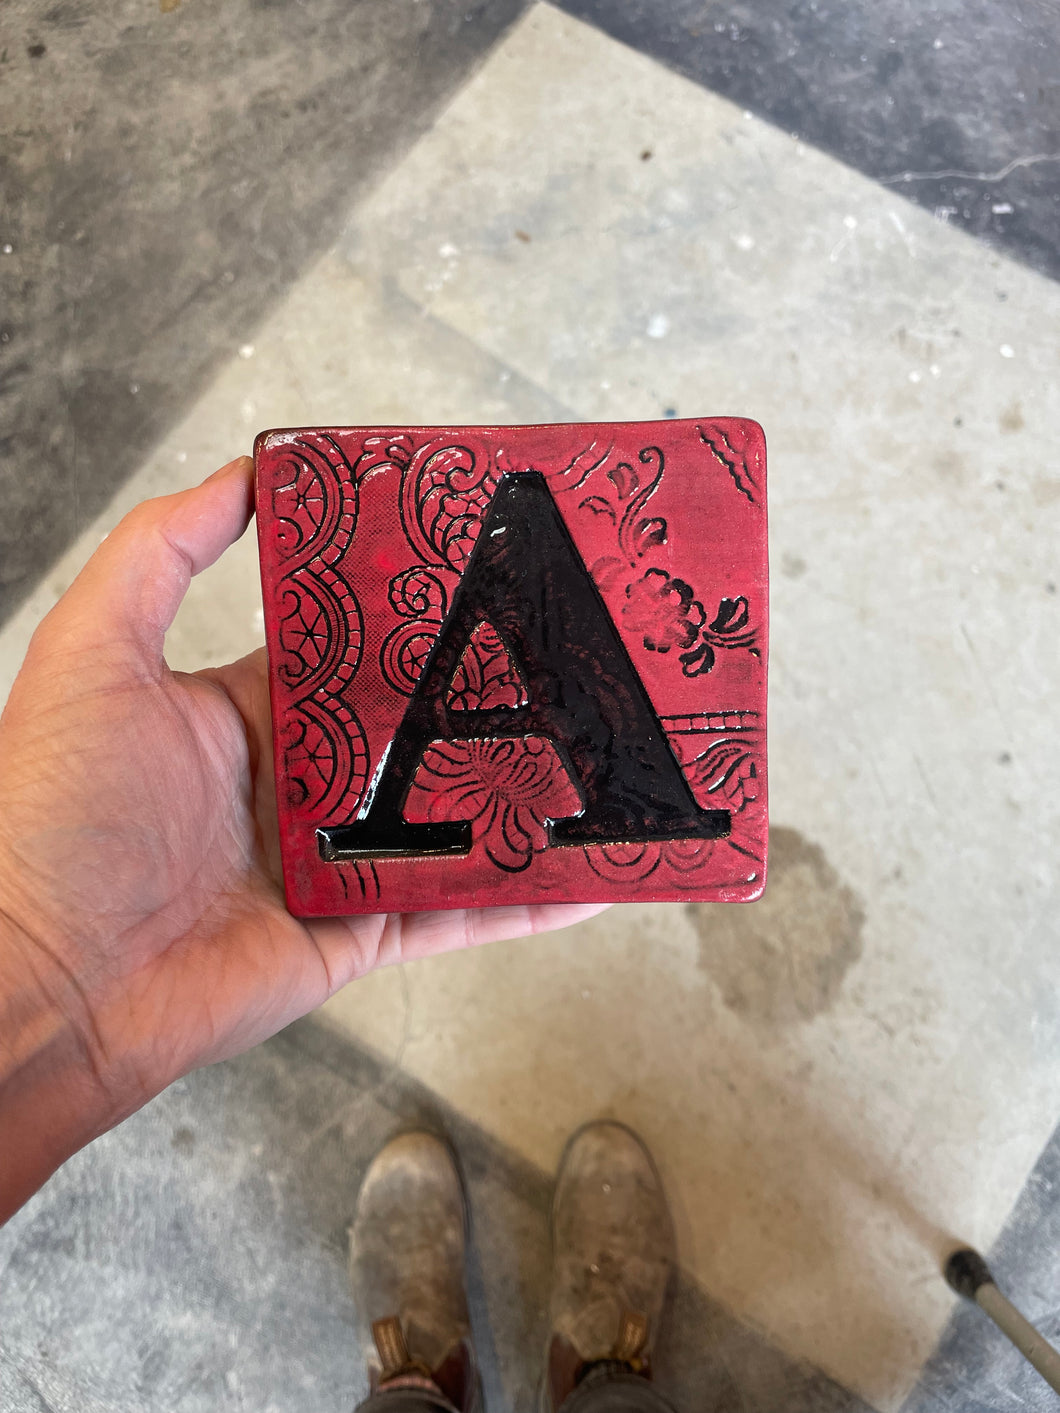 Letter A ceramic tile